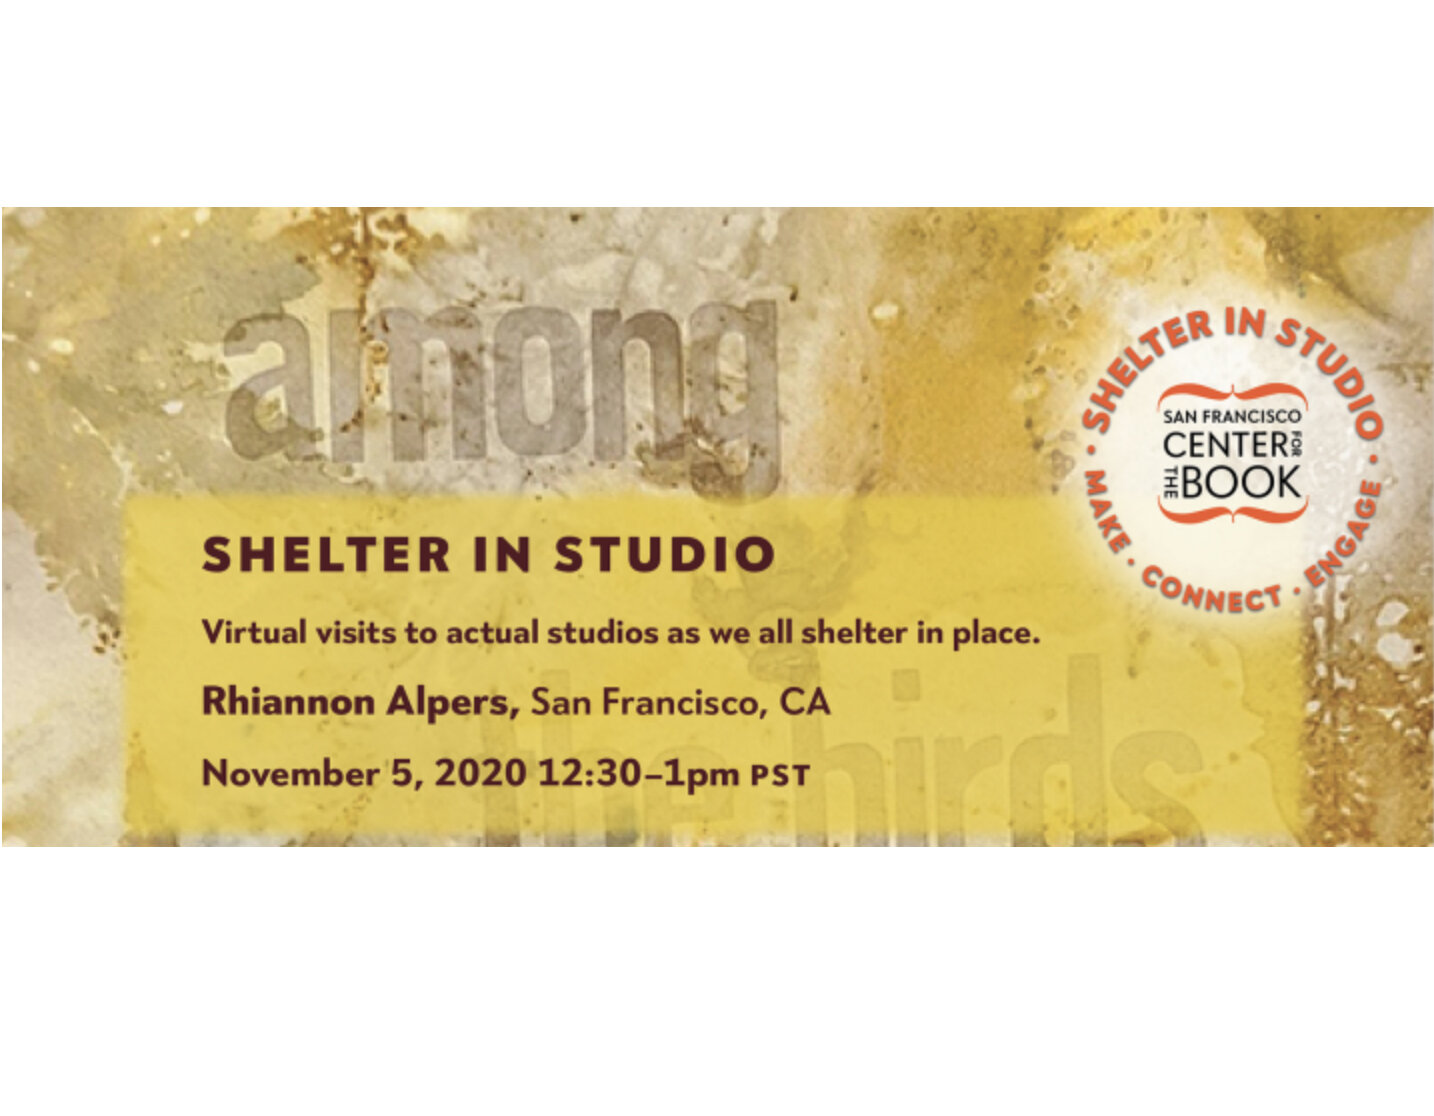 The Shelter Studios